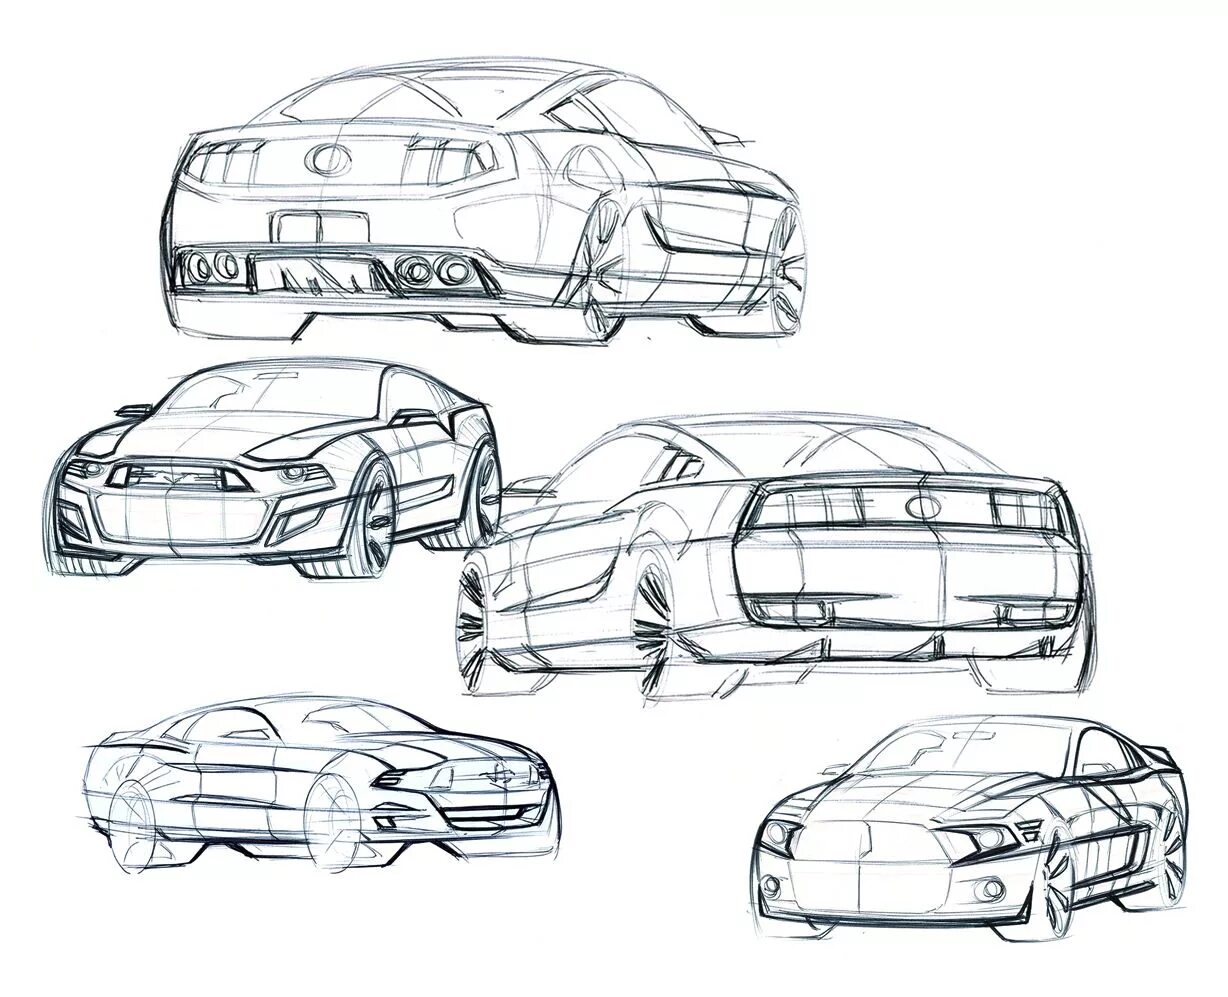 Ford Mustang Shelby gt500 Blueprints. Эскиз автомобиля. Автомобиль рисунок. Машина скетч. Со всех сторон сразу